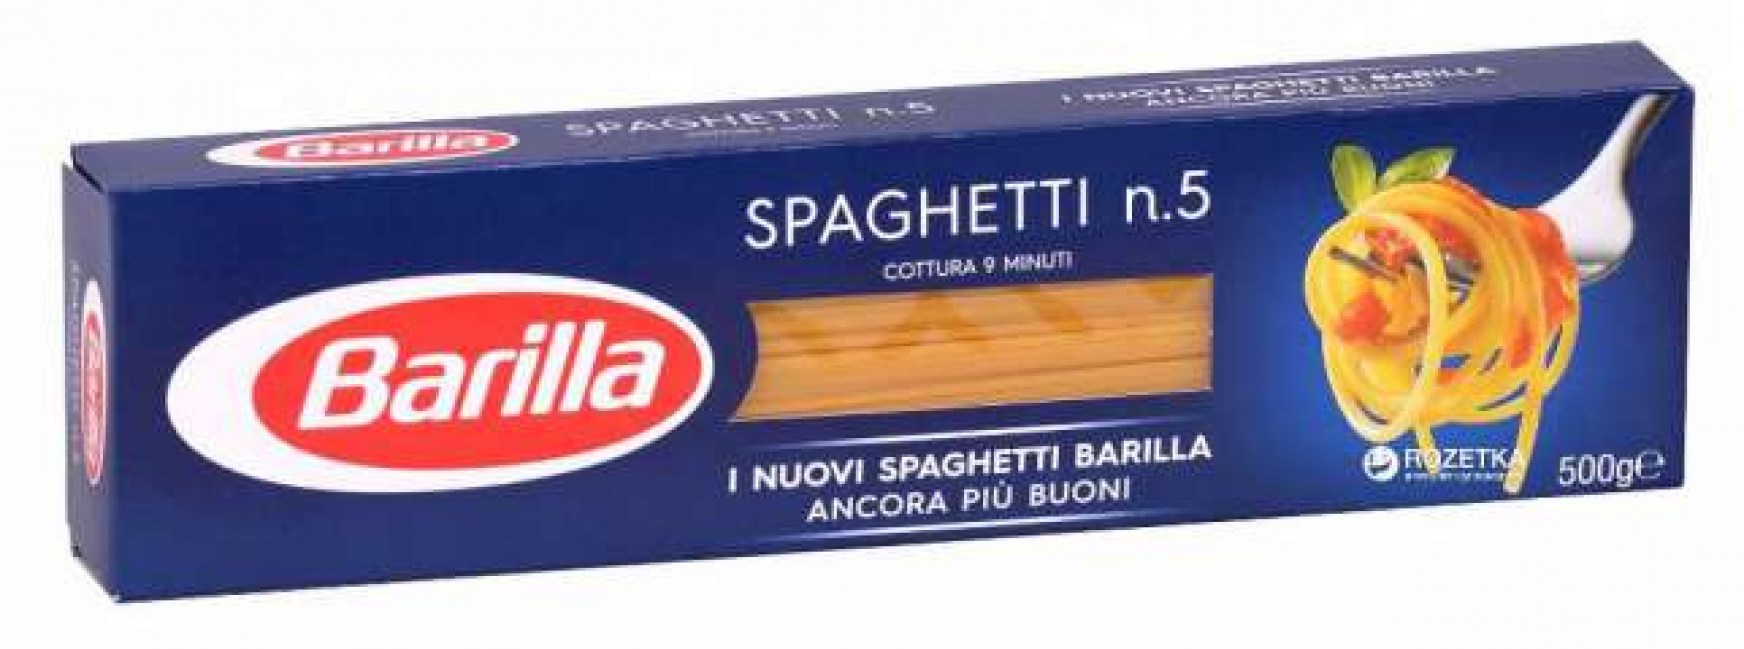 522315320_2_644x461_makarony-barilla-barilla-spagetti-n5-500-g-iz-tverdyh-sortov-fotografii